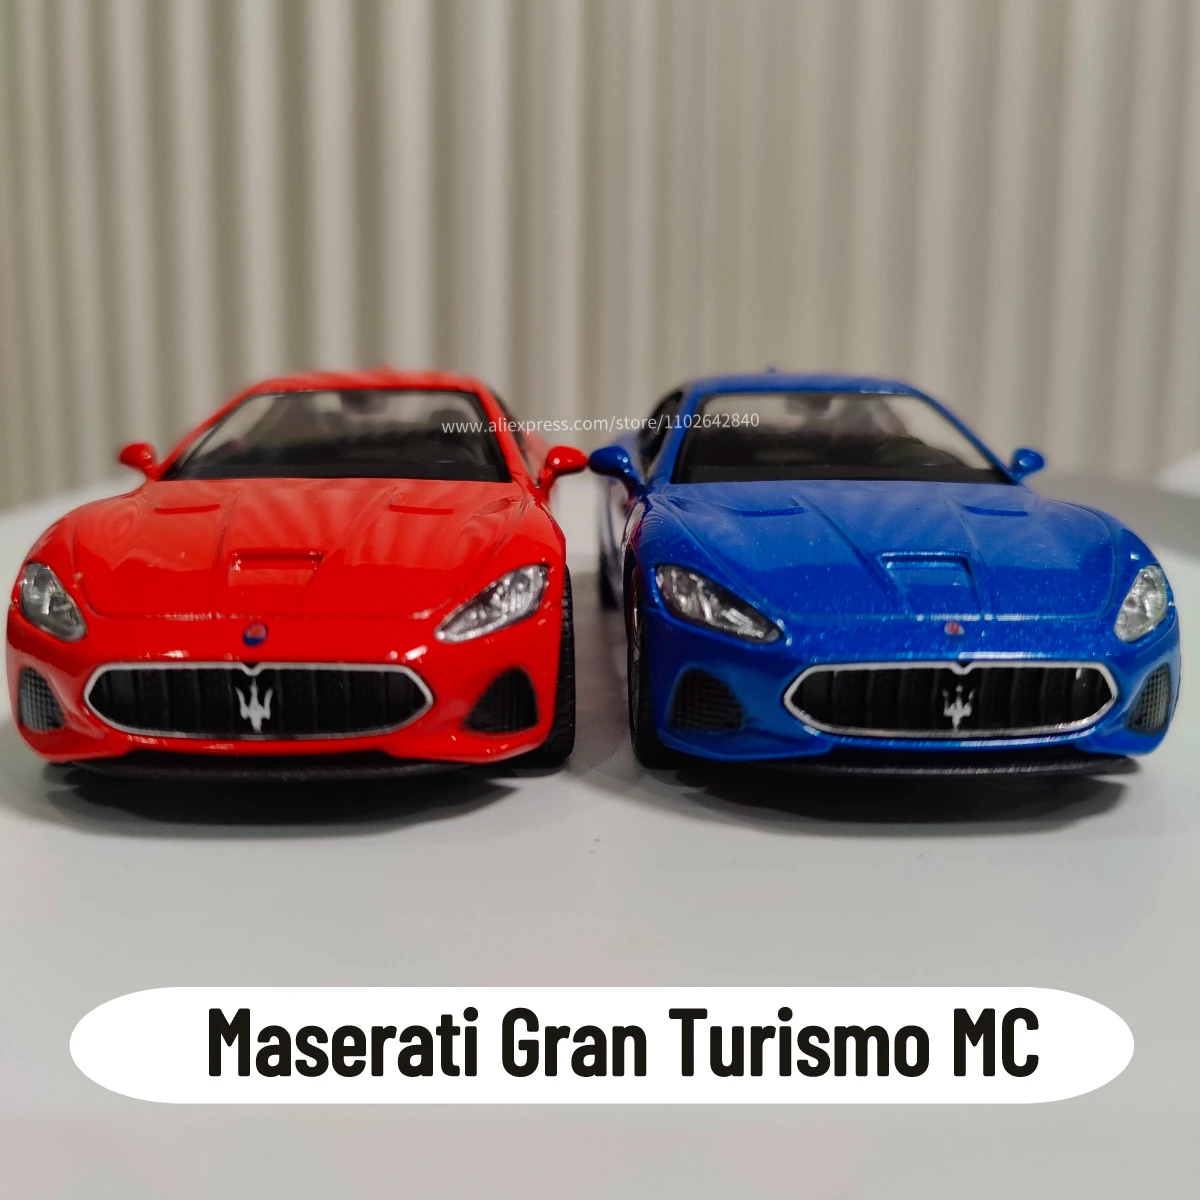 1:36 Maserati Gran Turismo MC Car Model Replica Scale Metal Miniature Art  Home Decor Hobby Xmas Kid Gift Toy Collection